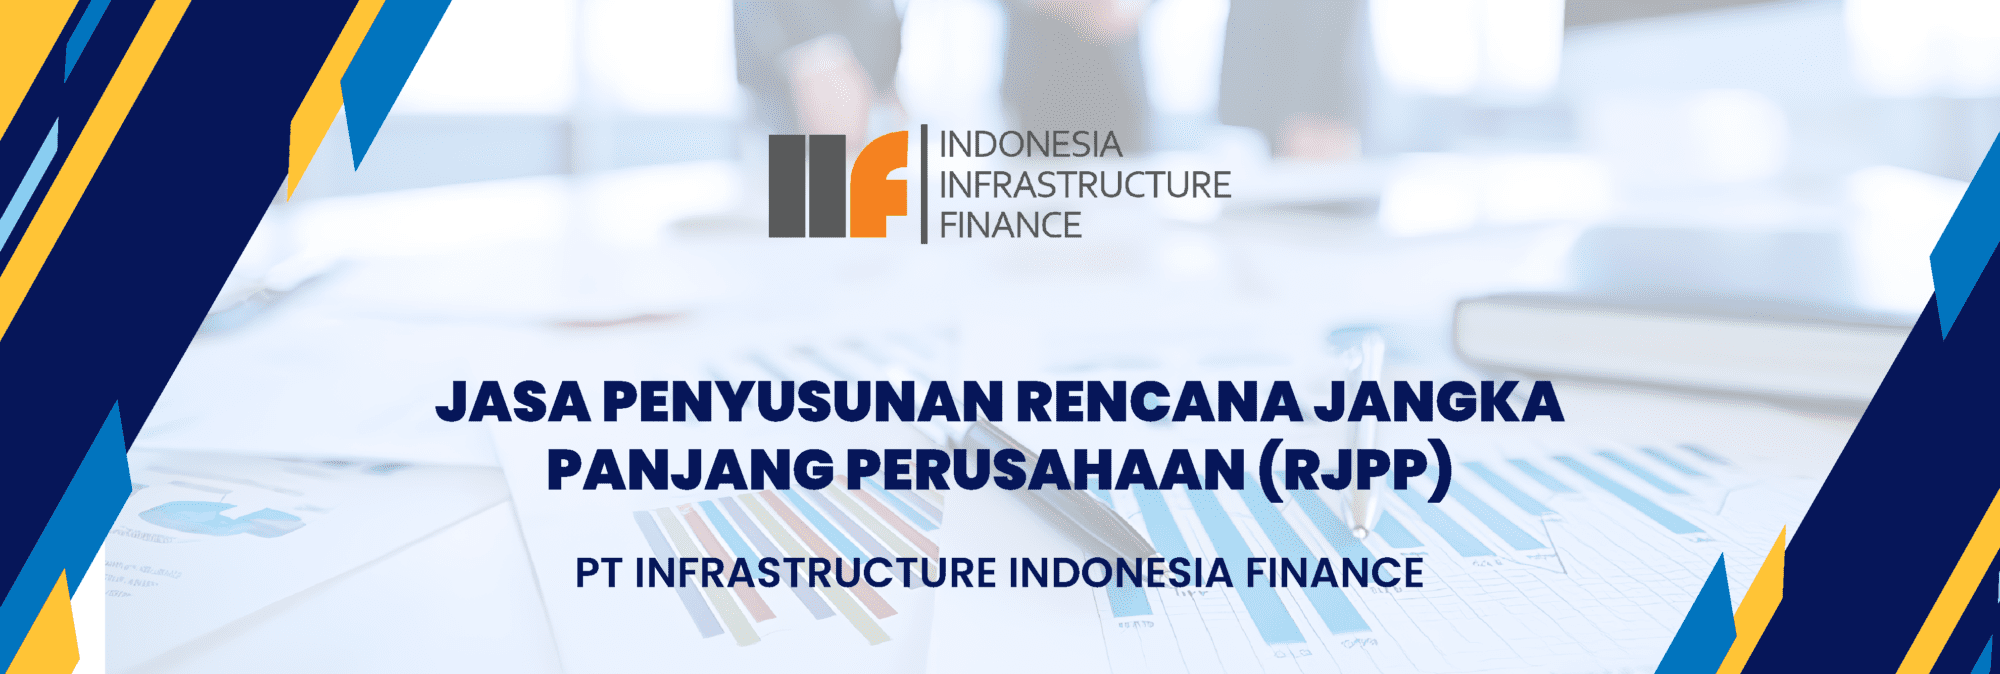 RJPP Indonesia Infrastructure Finance